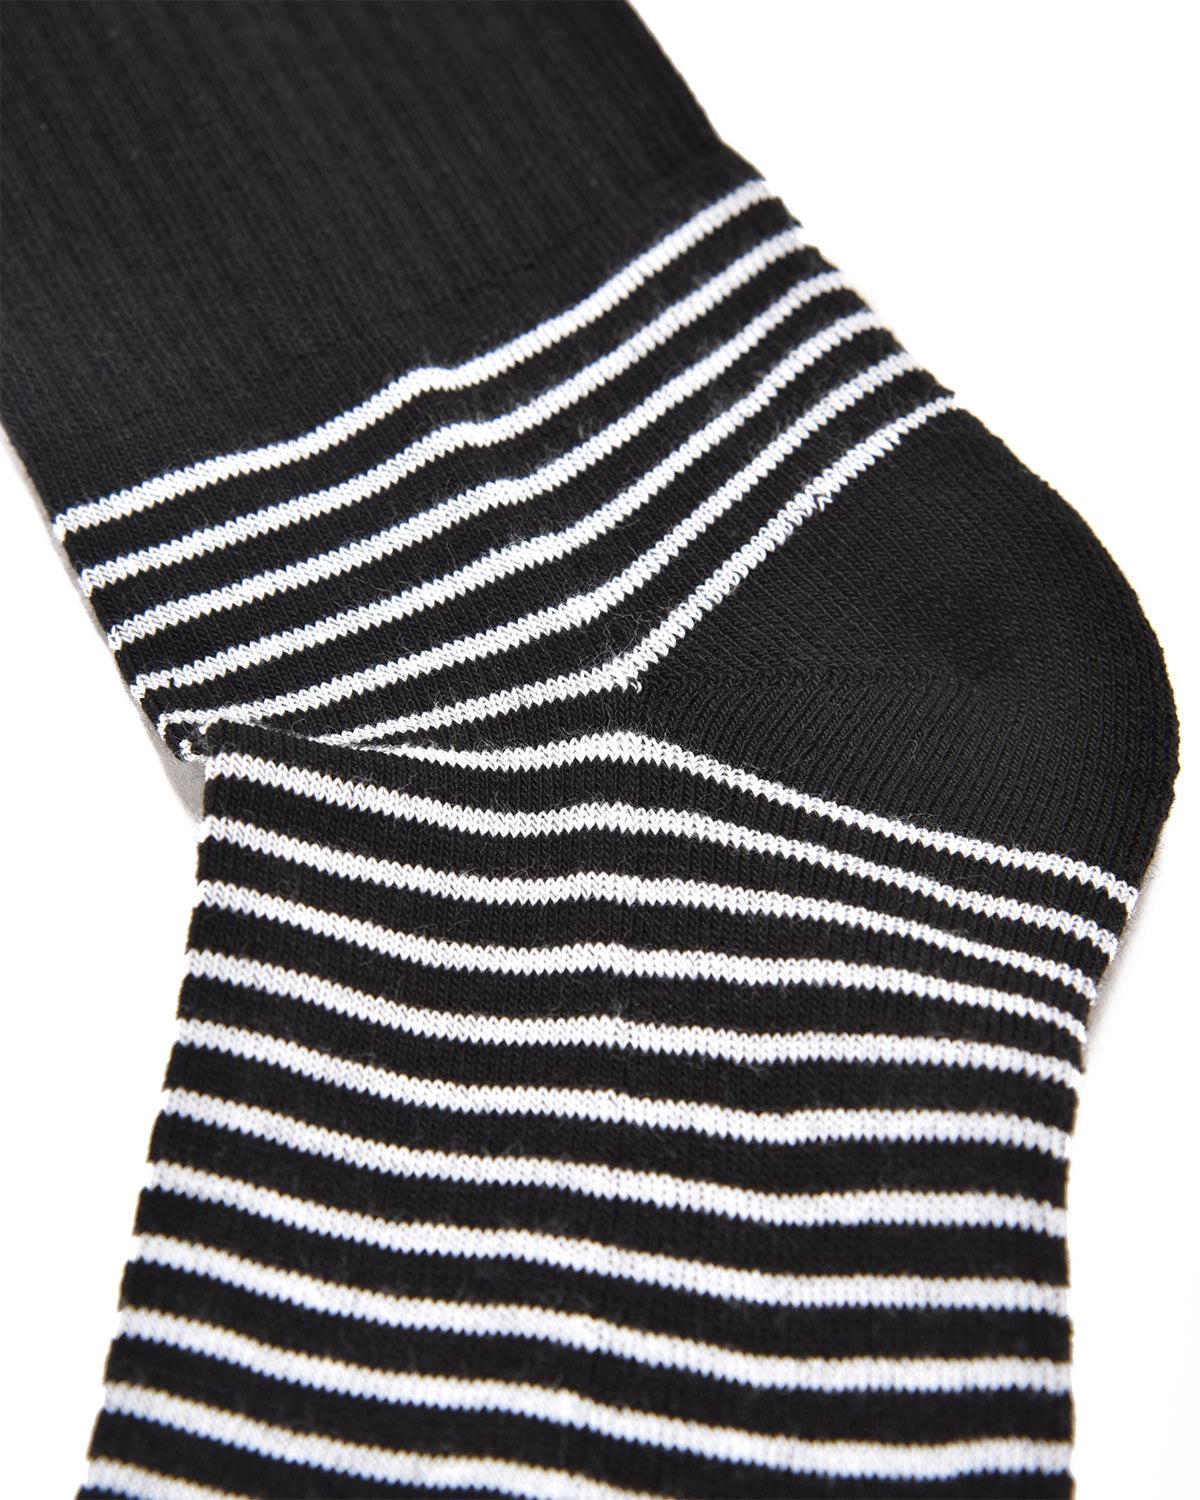 Black Scorpion Bay Socks with White Stripes Motif 